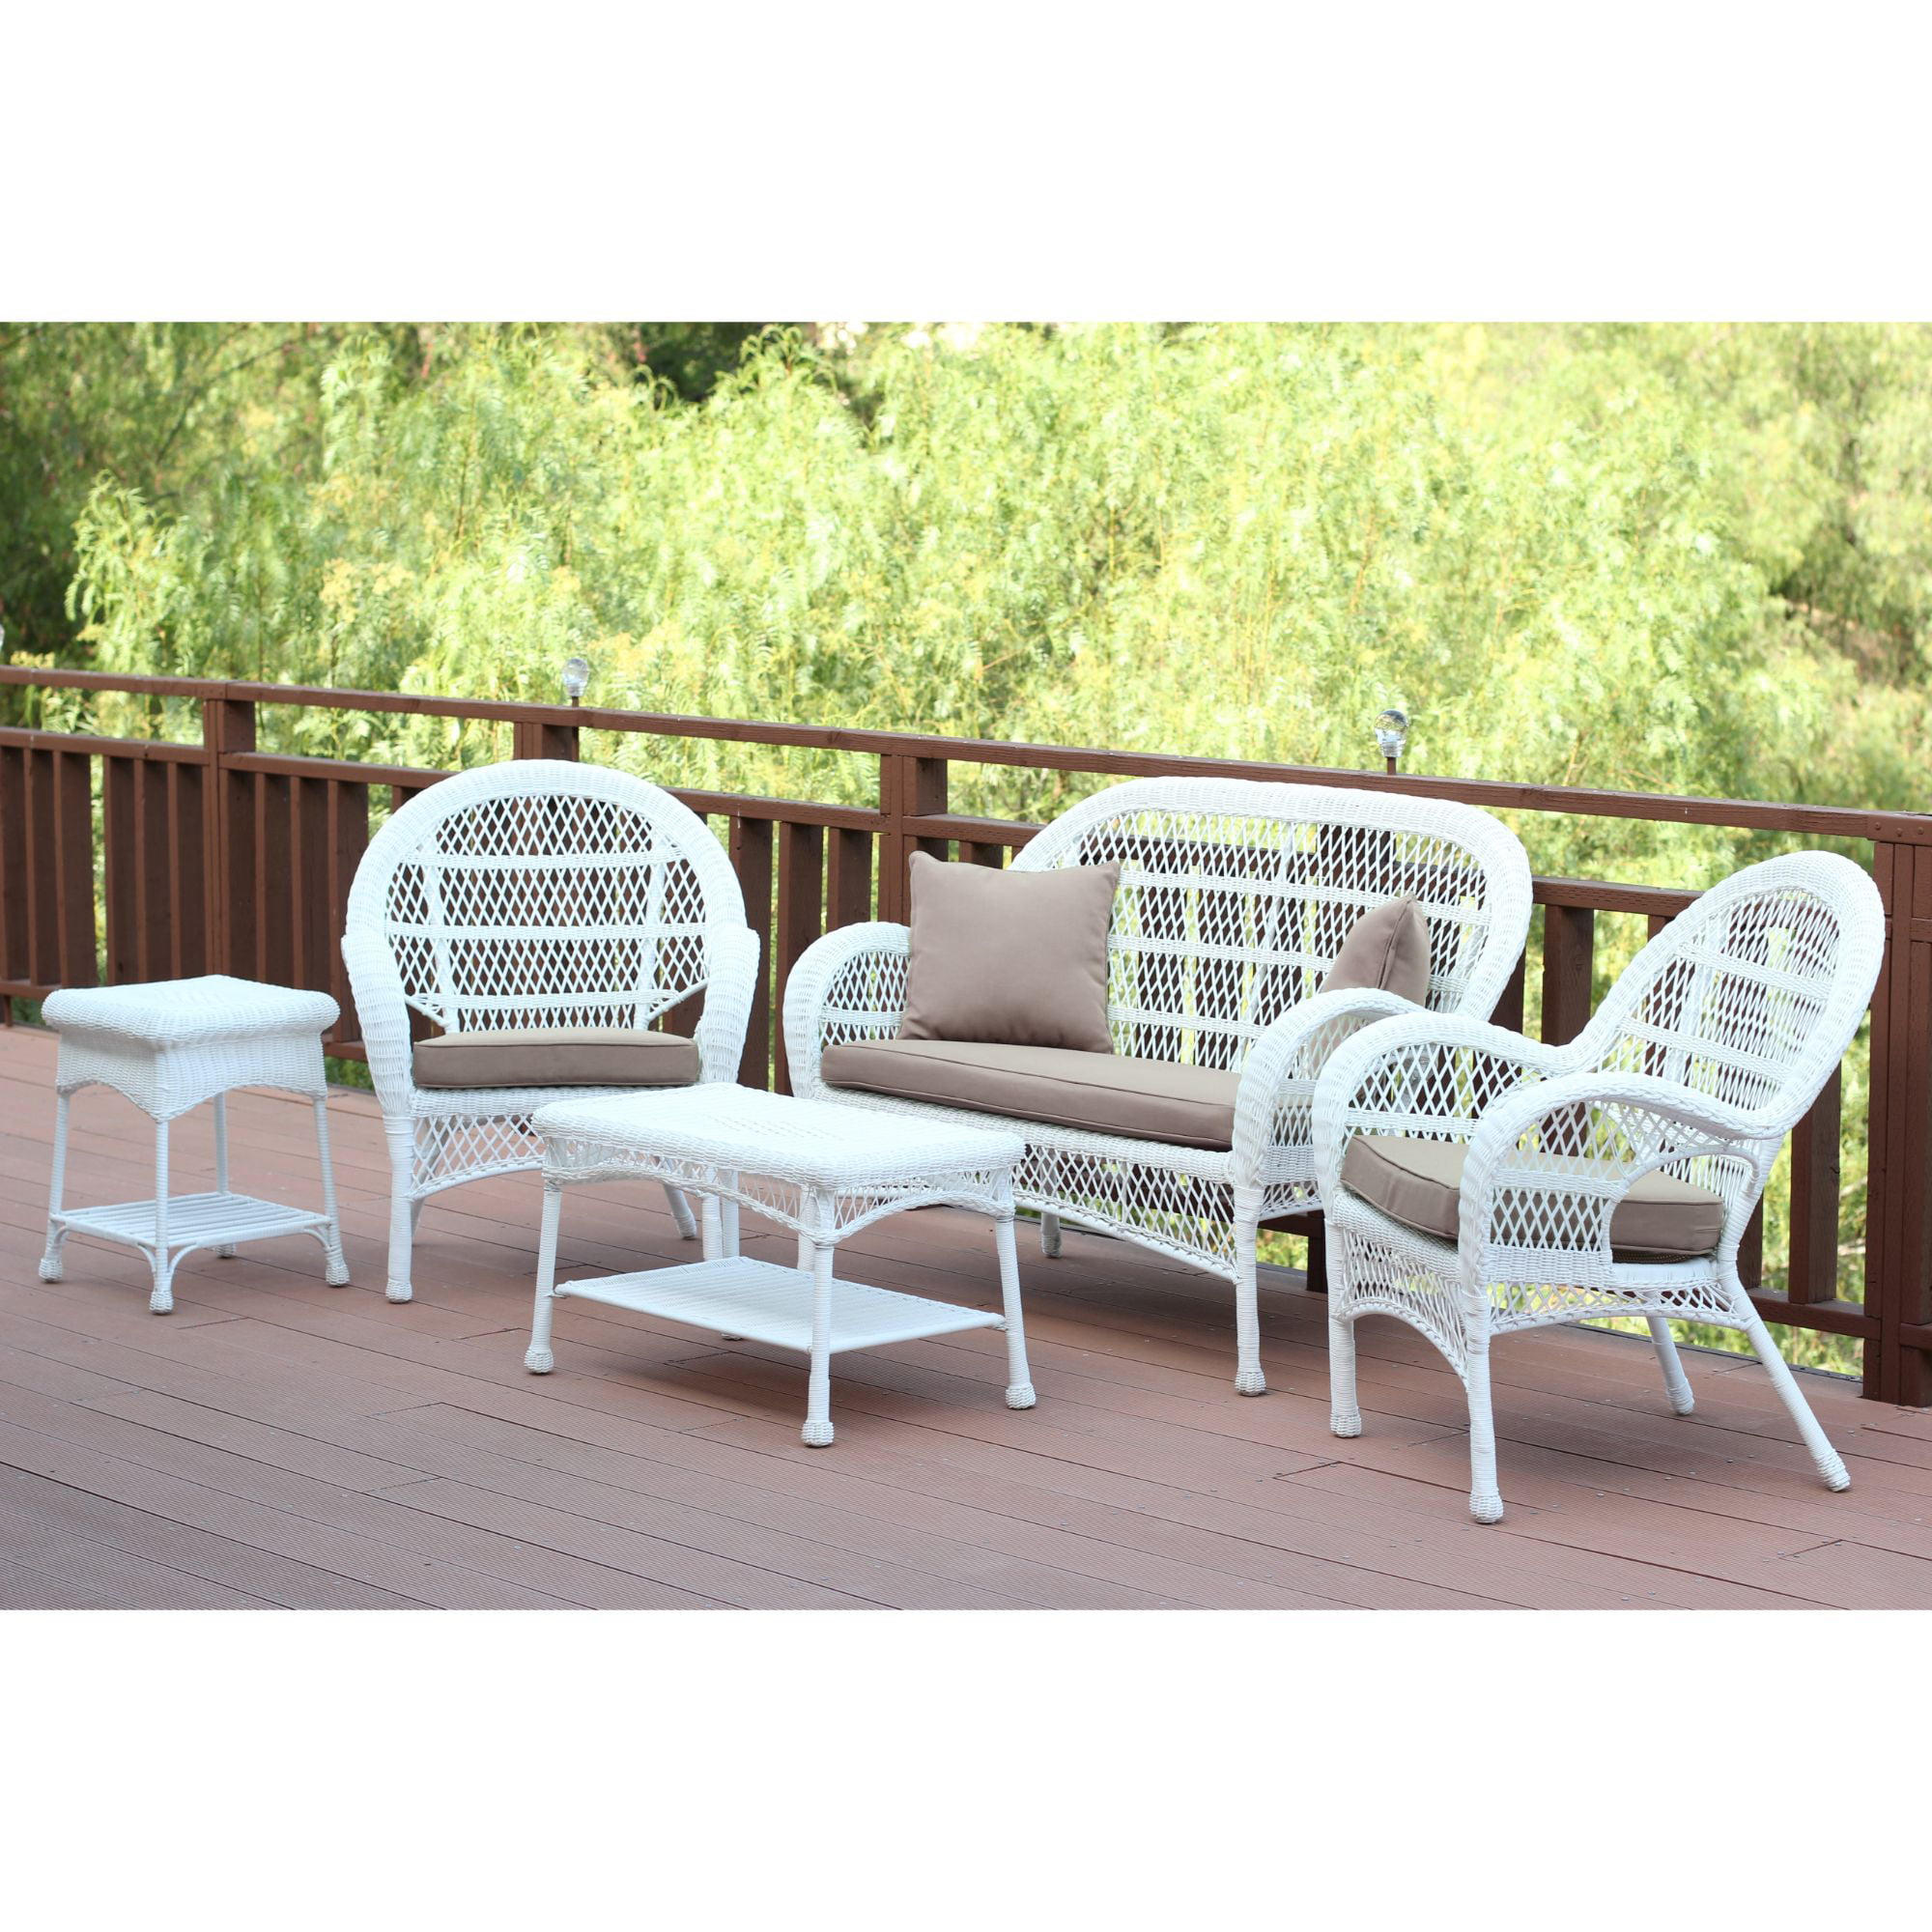 5-Piece White Wicker Outdoor Furniture Patio Conversation Set - Tan